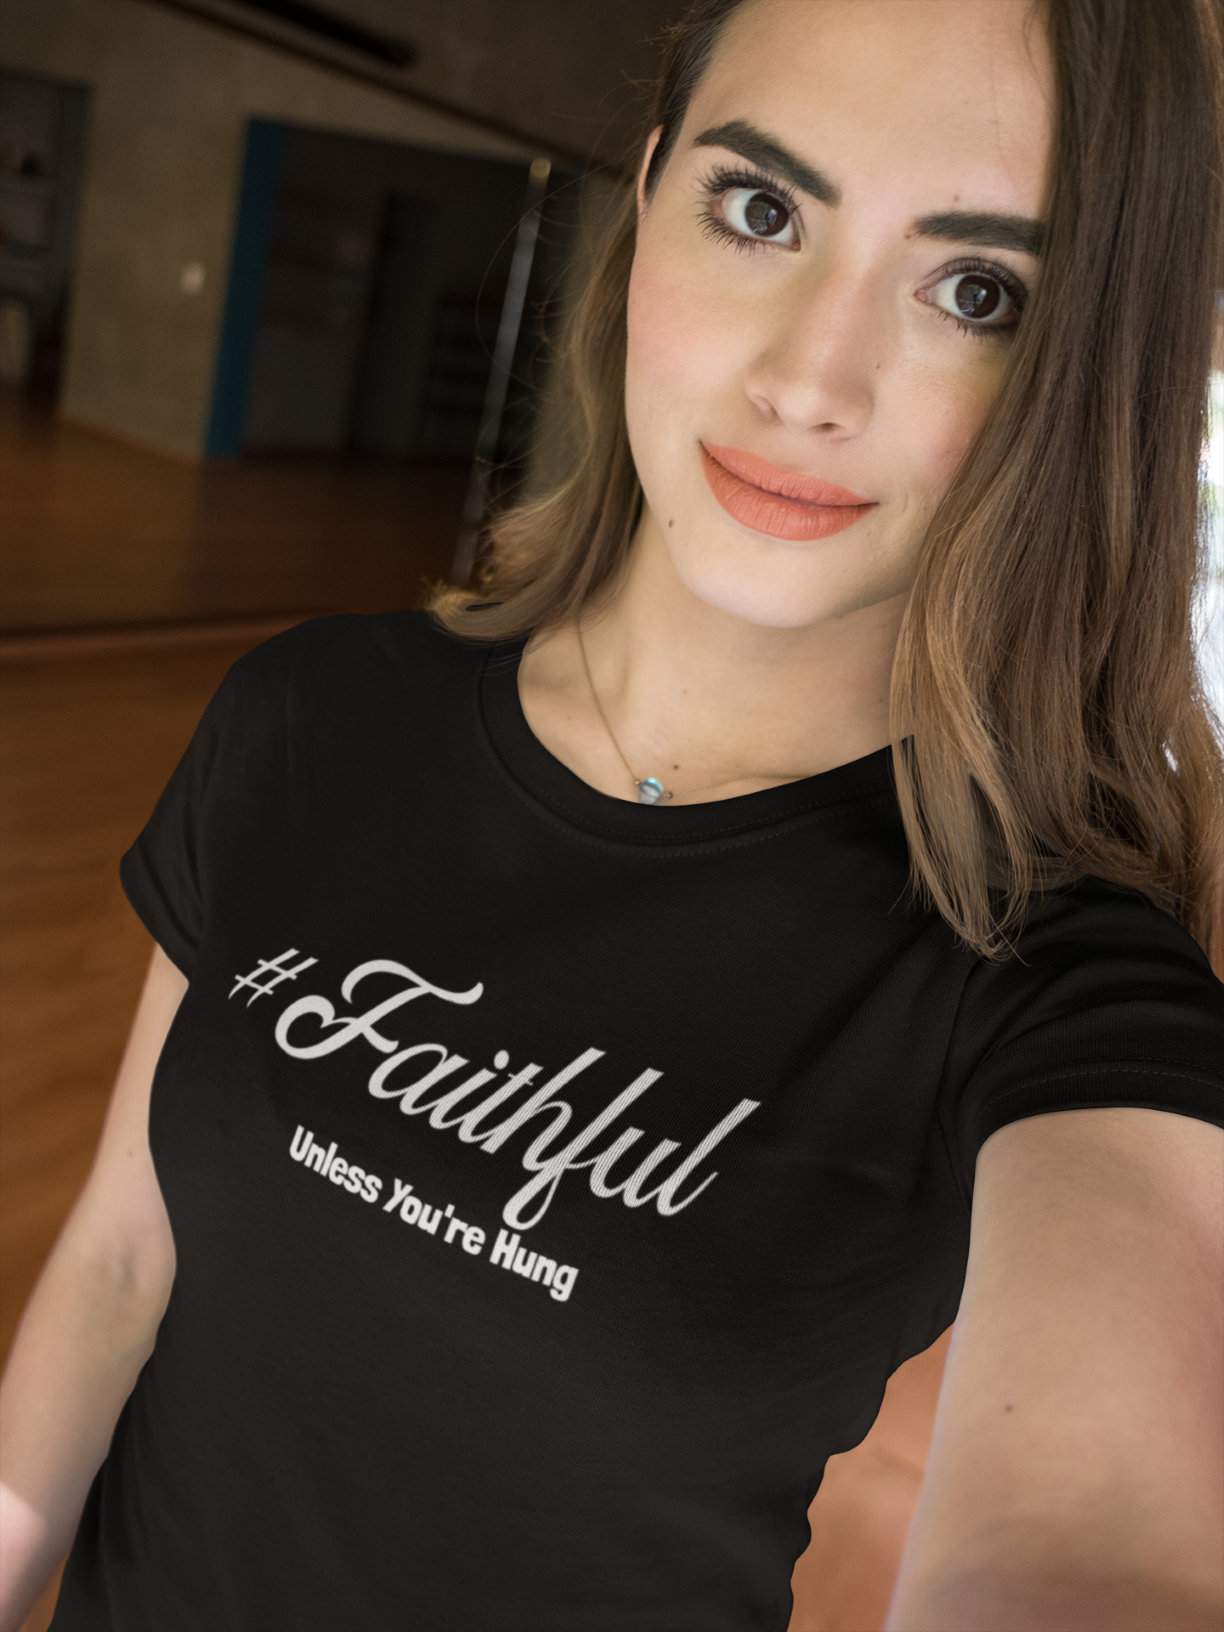 Hotwife Faithful Shirt Slut Shirt Stag and Vixen T-shirt | Etsy Canada